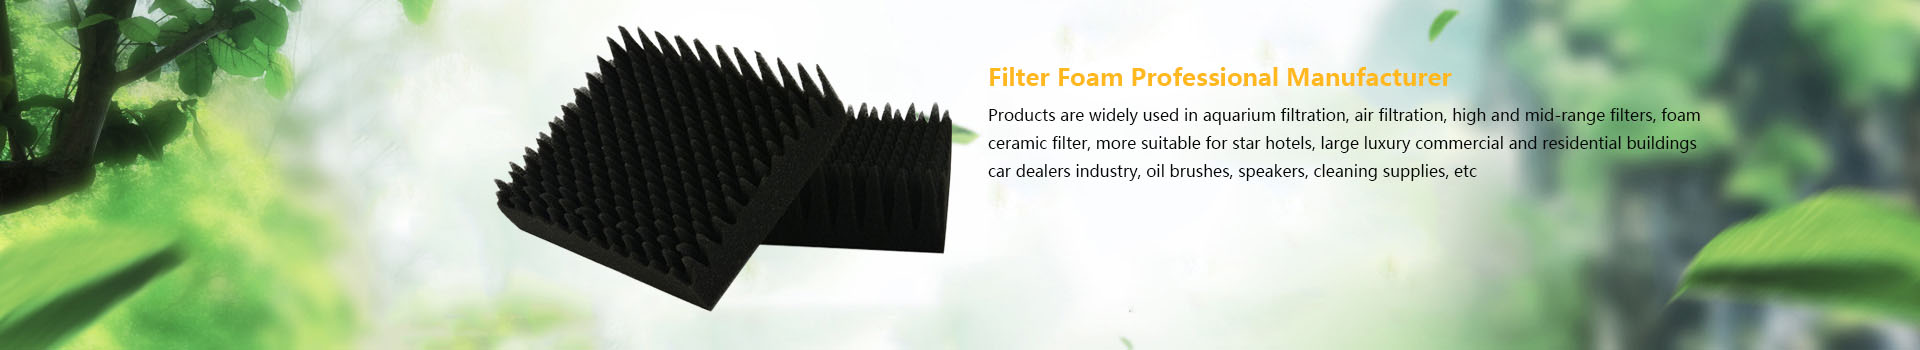 Mb Filter Foam Professional Manufacturer